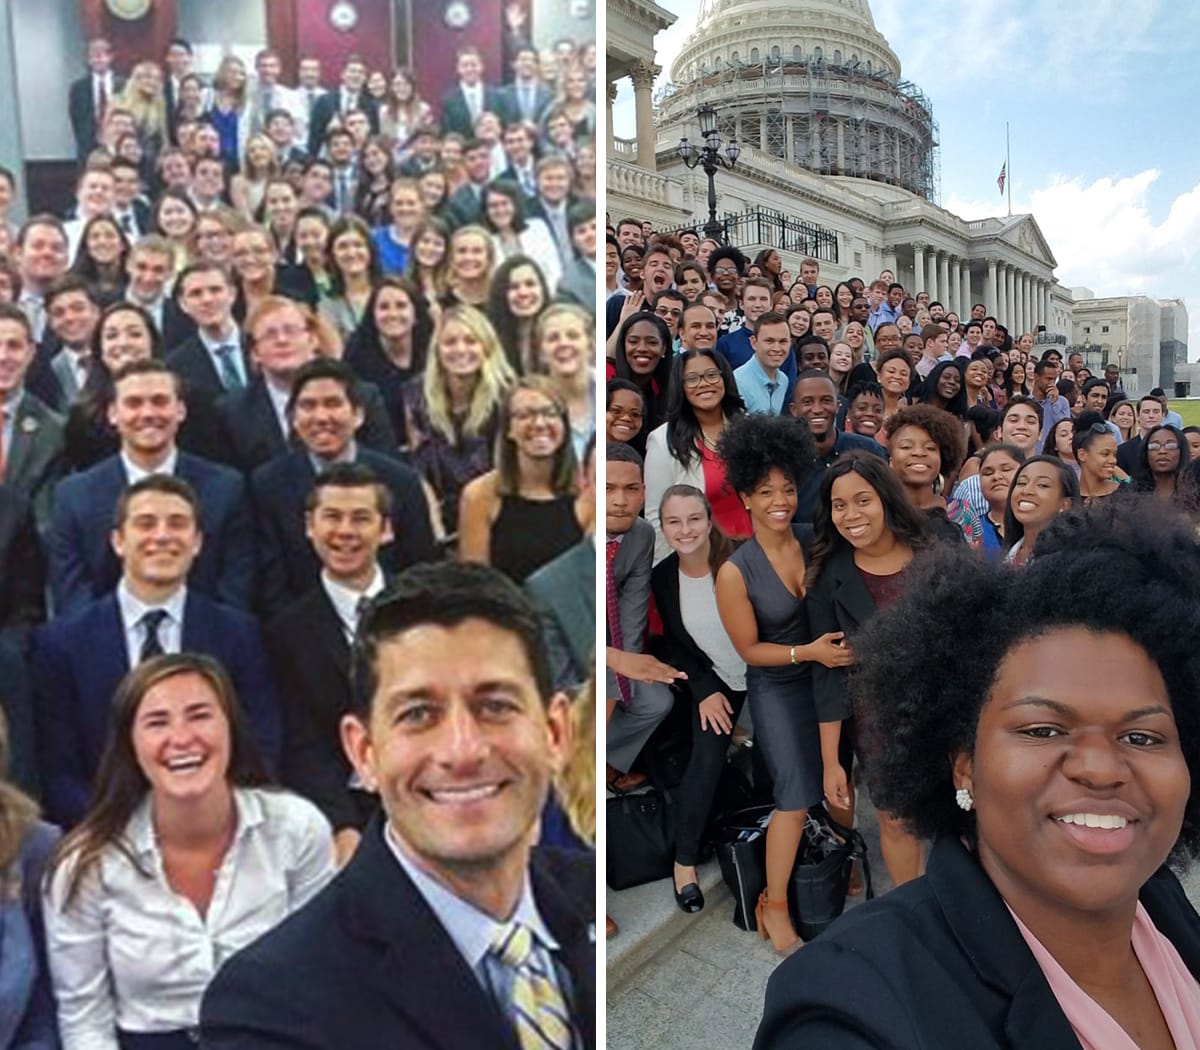 GOP and Dem Intern Class Photos Show Diversity Differences